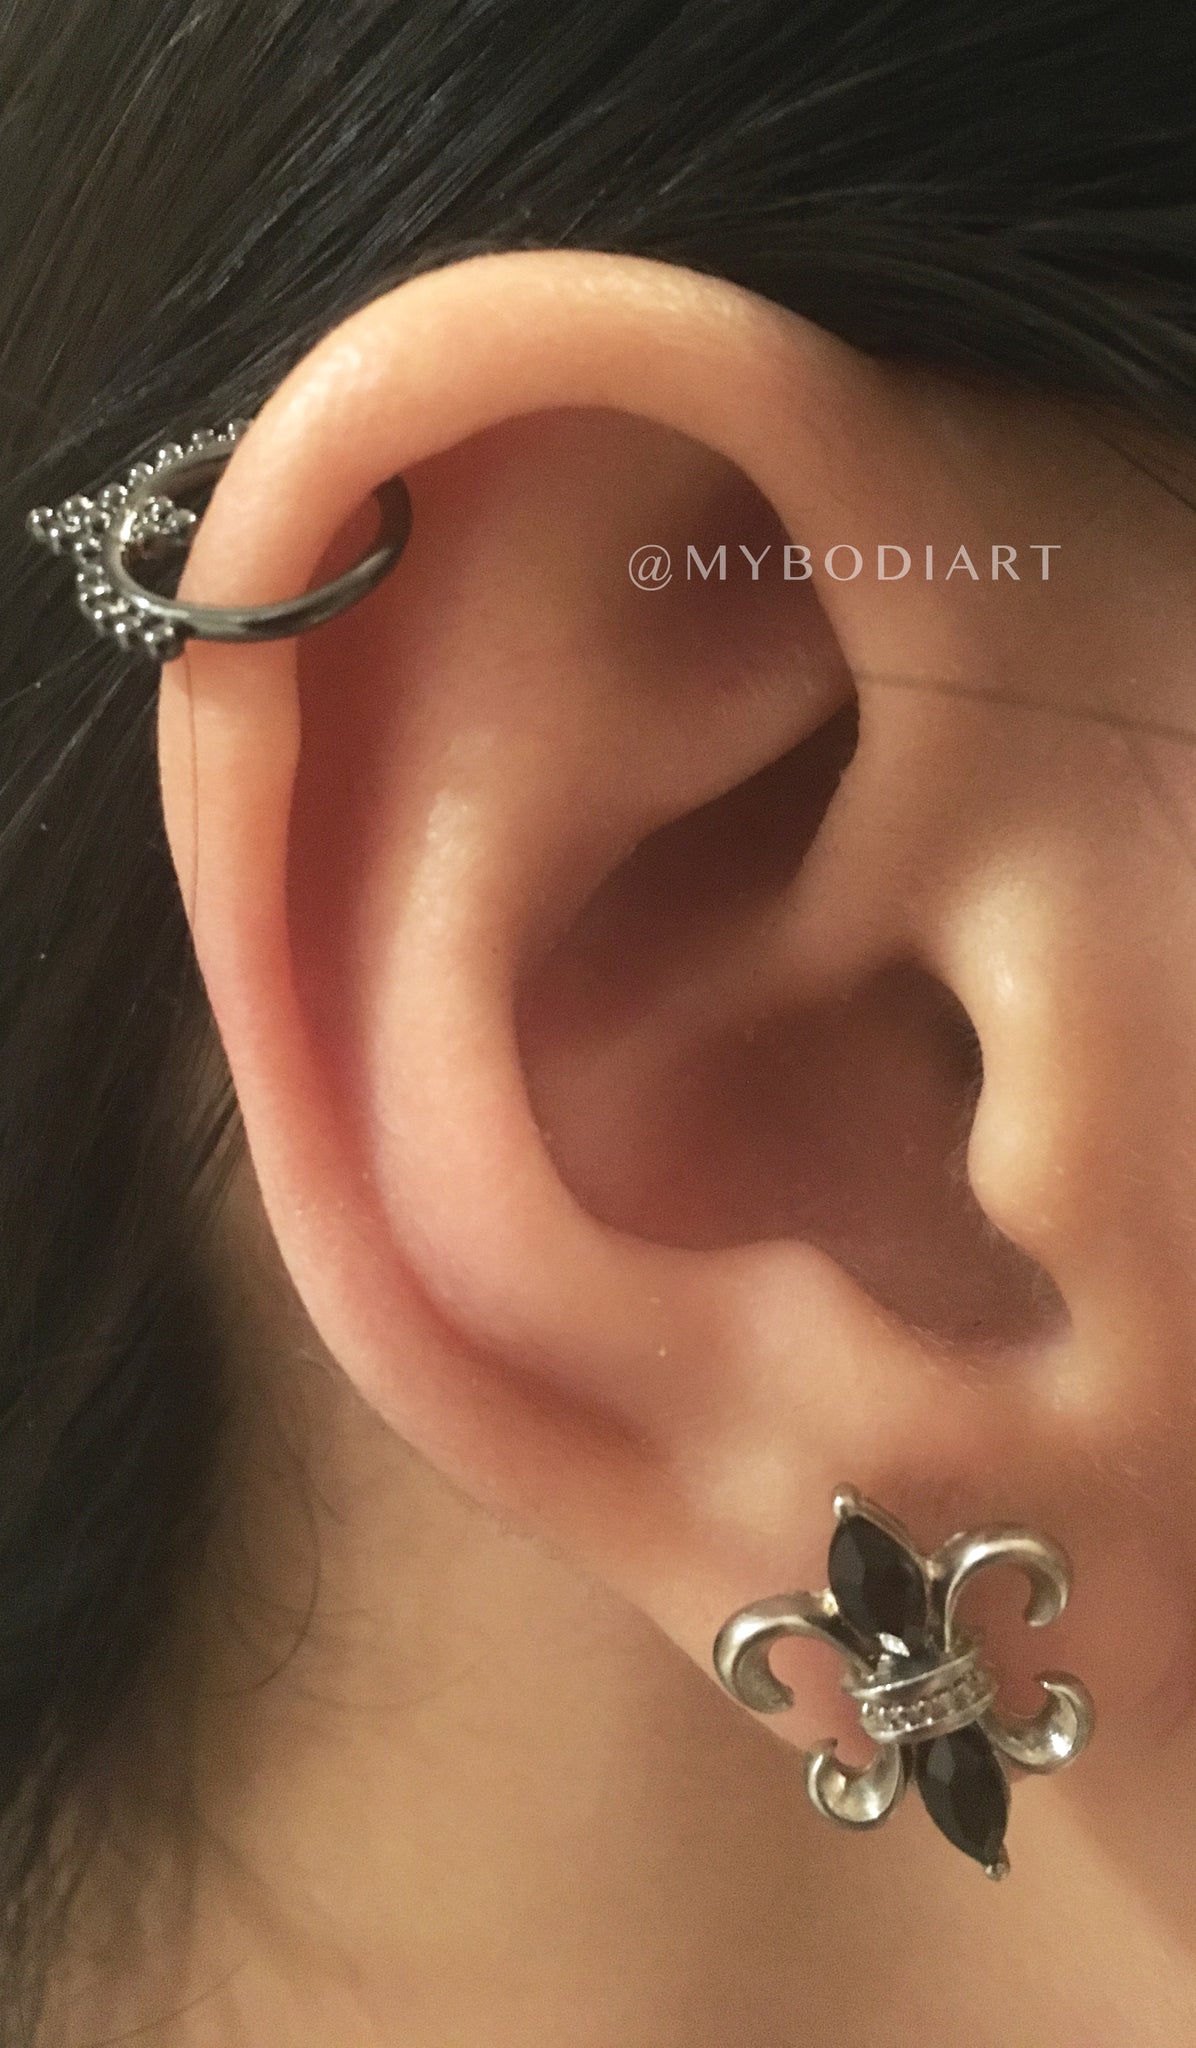 Tribal Boho Ear Piercing Ideas for Girls - Black Cartilage Helix Ring Hoop - fur elise symbol stud earring - www.MyBodiArt.com